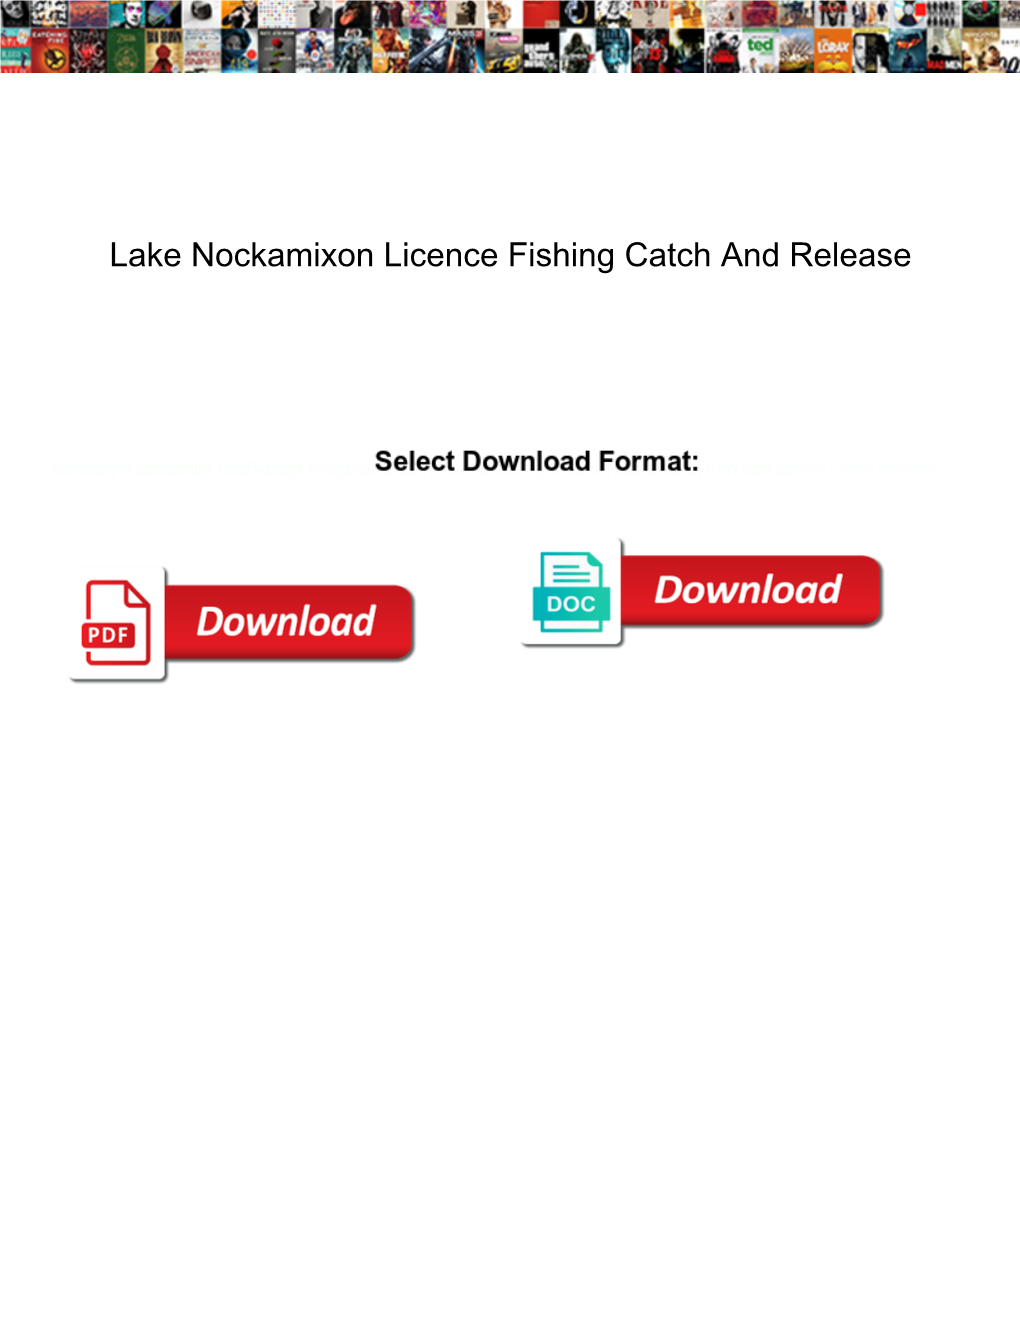 Lake Nockamixon Licence Fishing Catch and Release